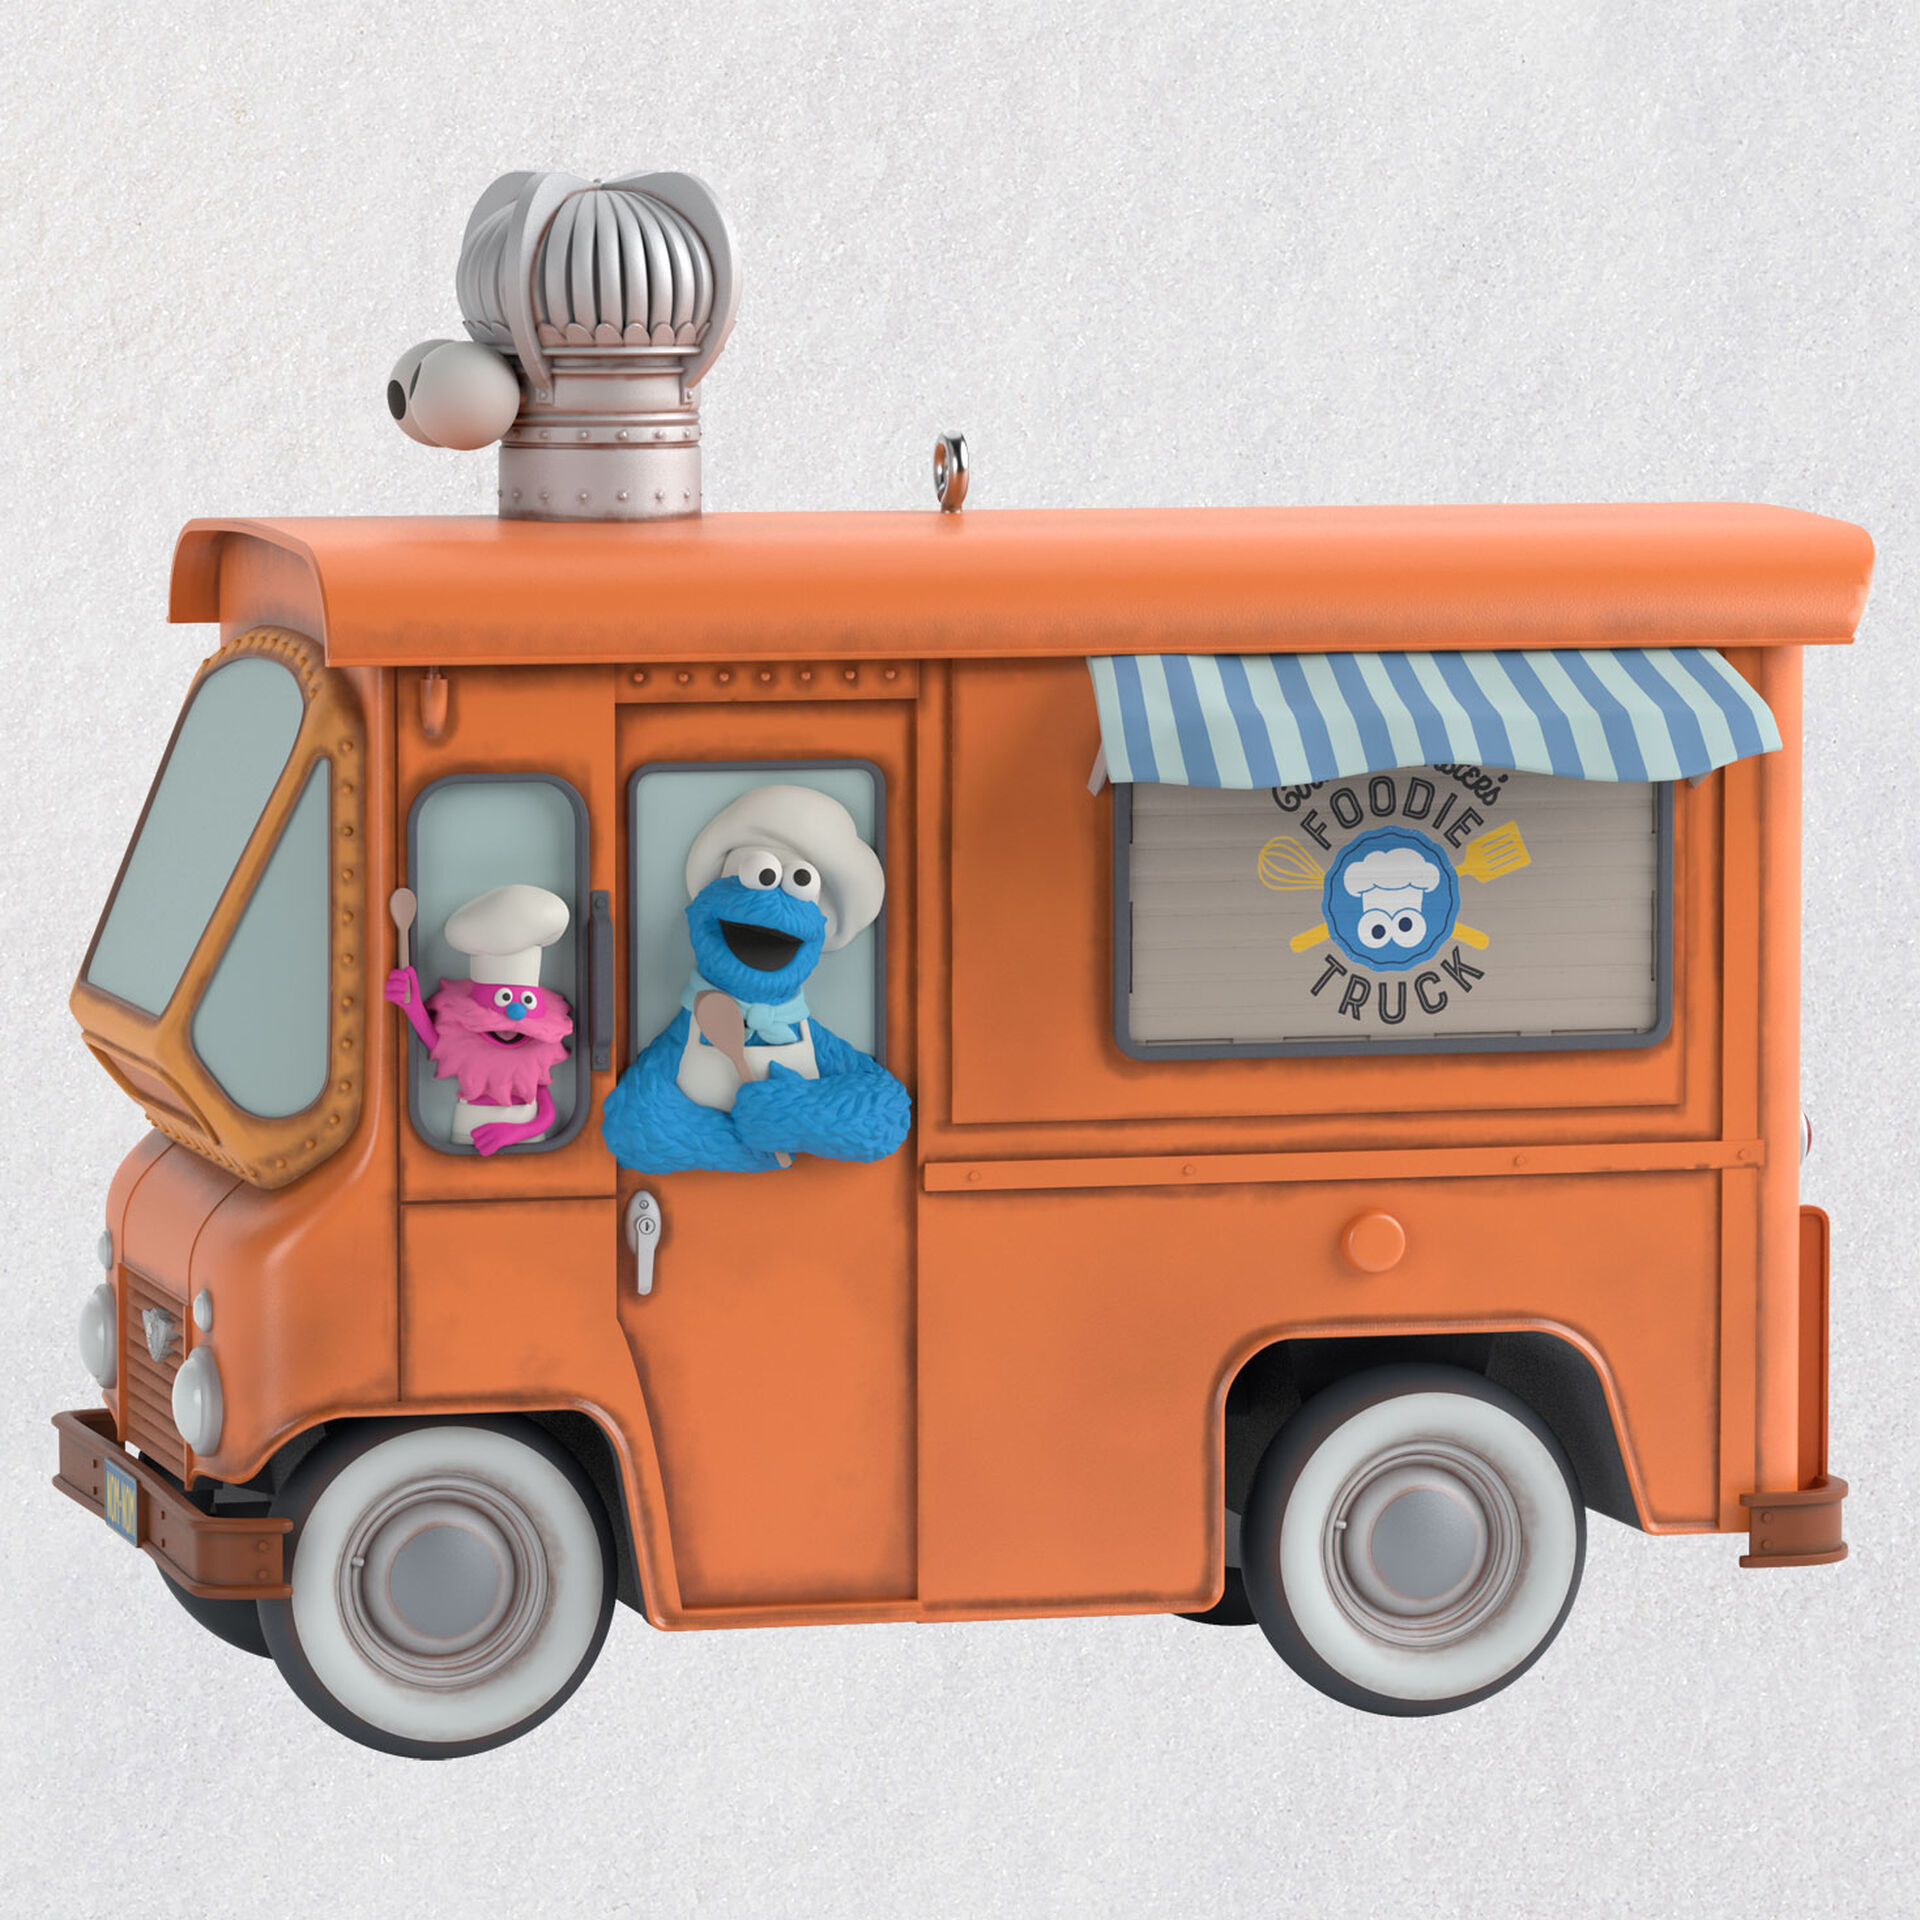 https://occasionshallmark.com/wp-content/uploads/2021/01/Sesame-Street-Cookie-Monsters-Foodie-Truck-Keepsake-Ornament-With-Sound_1999QXI2734_01.jpg